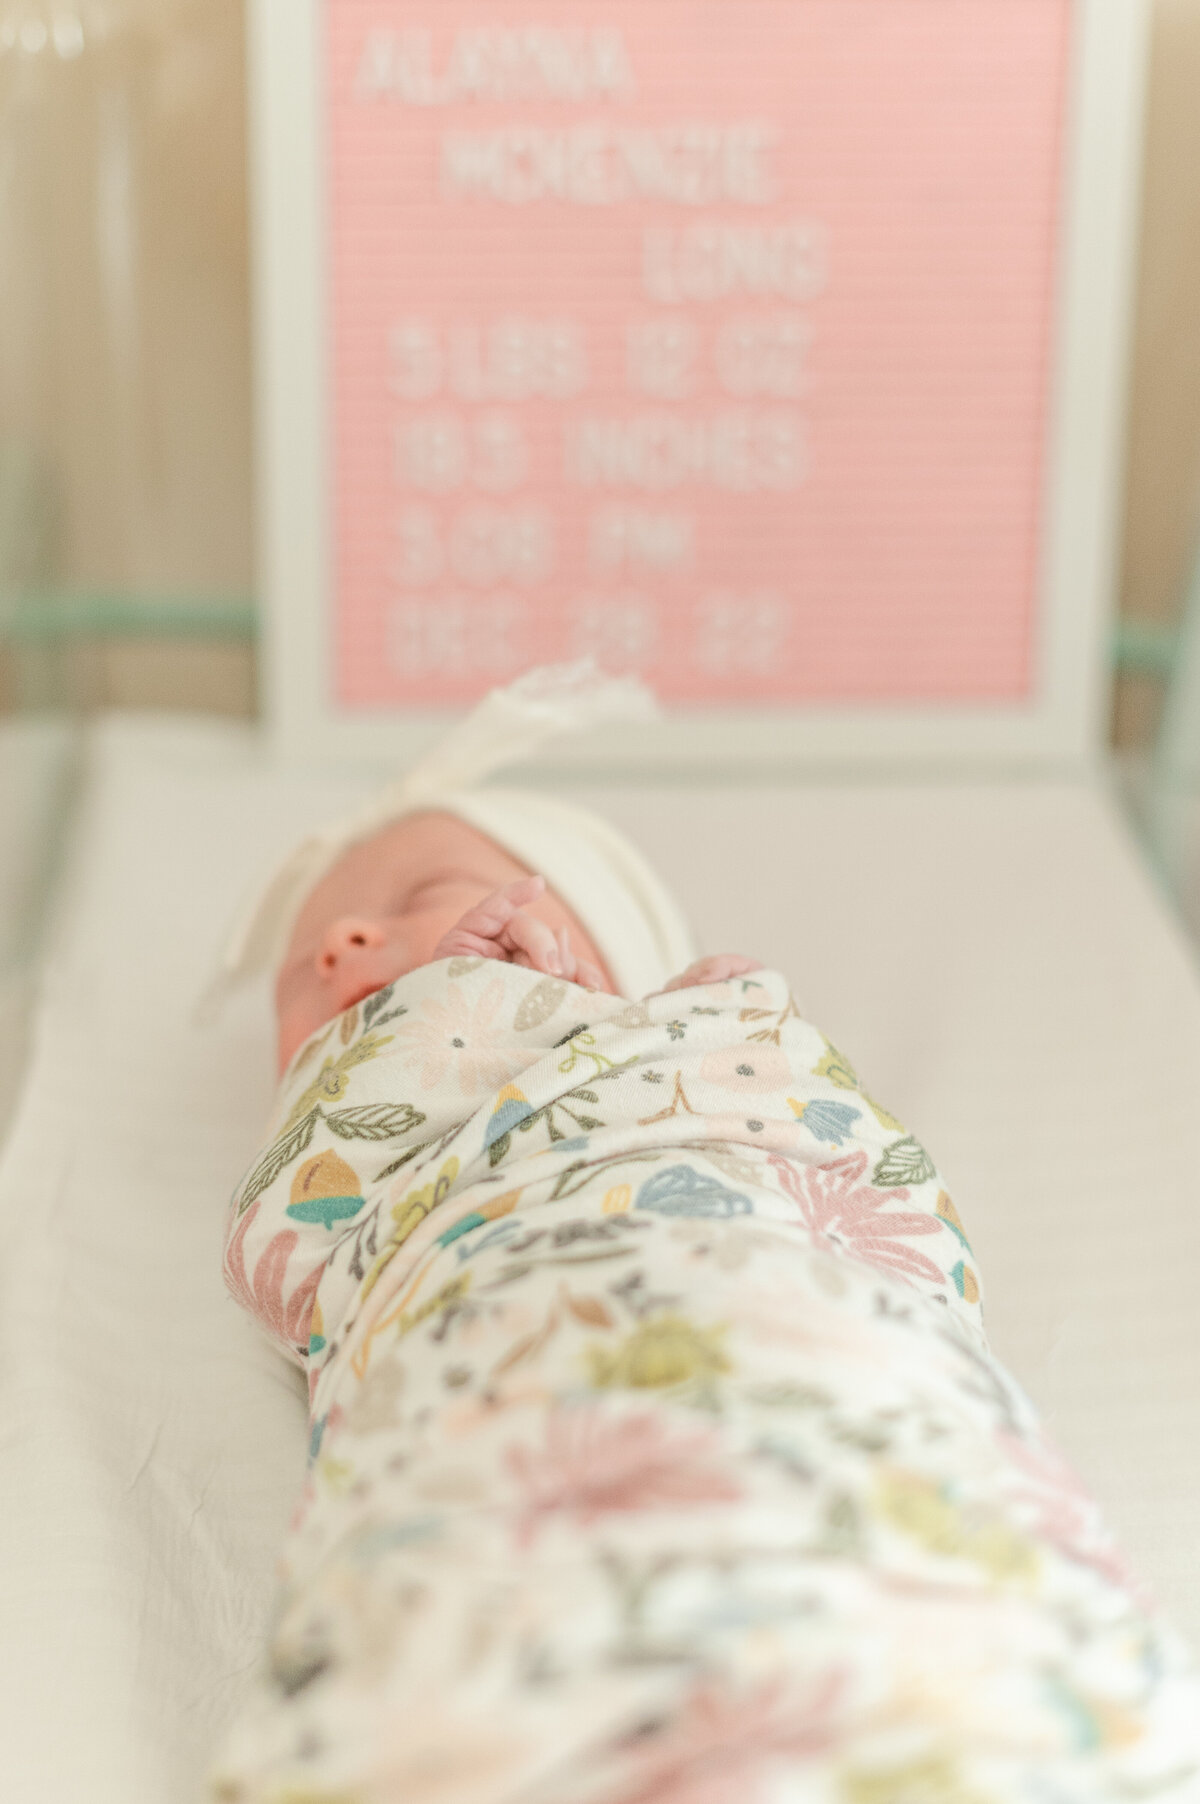 newborn sleeping in bassinet wrapped in flower blanket at hospital harrisburg pa